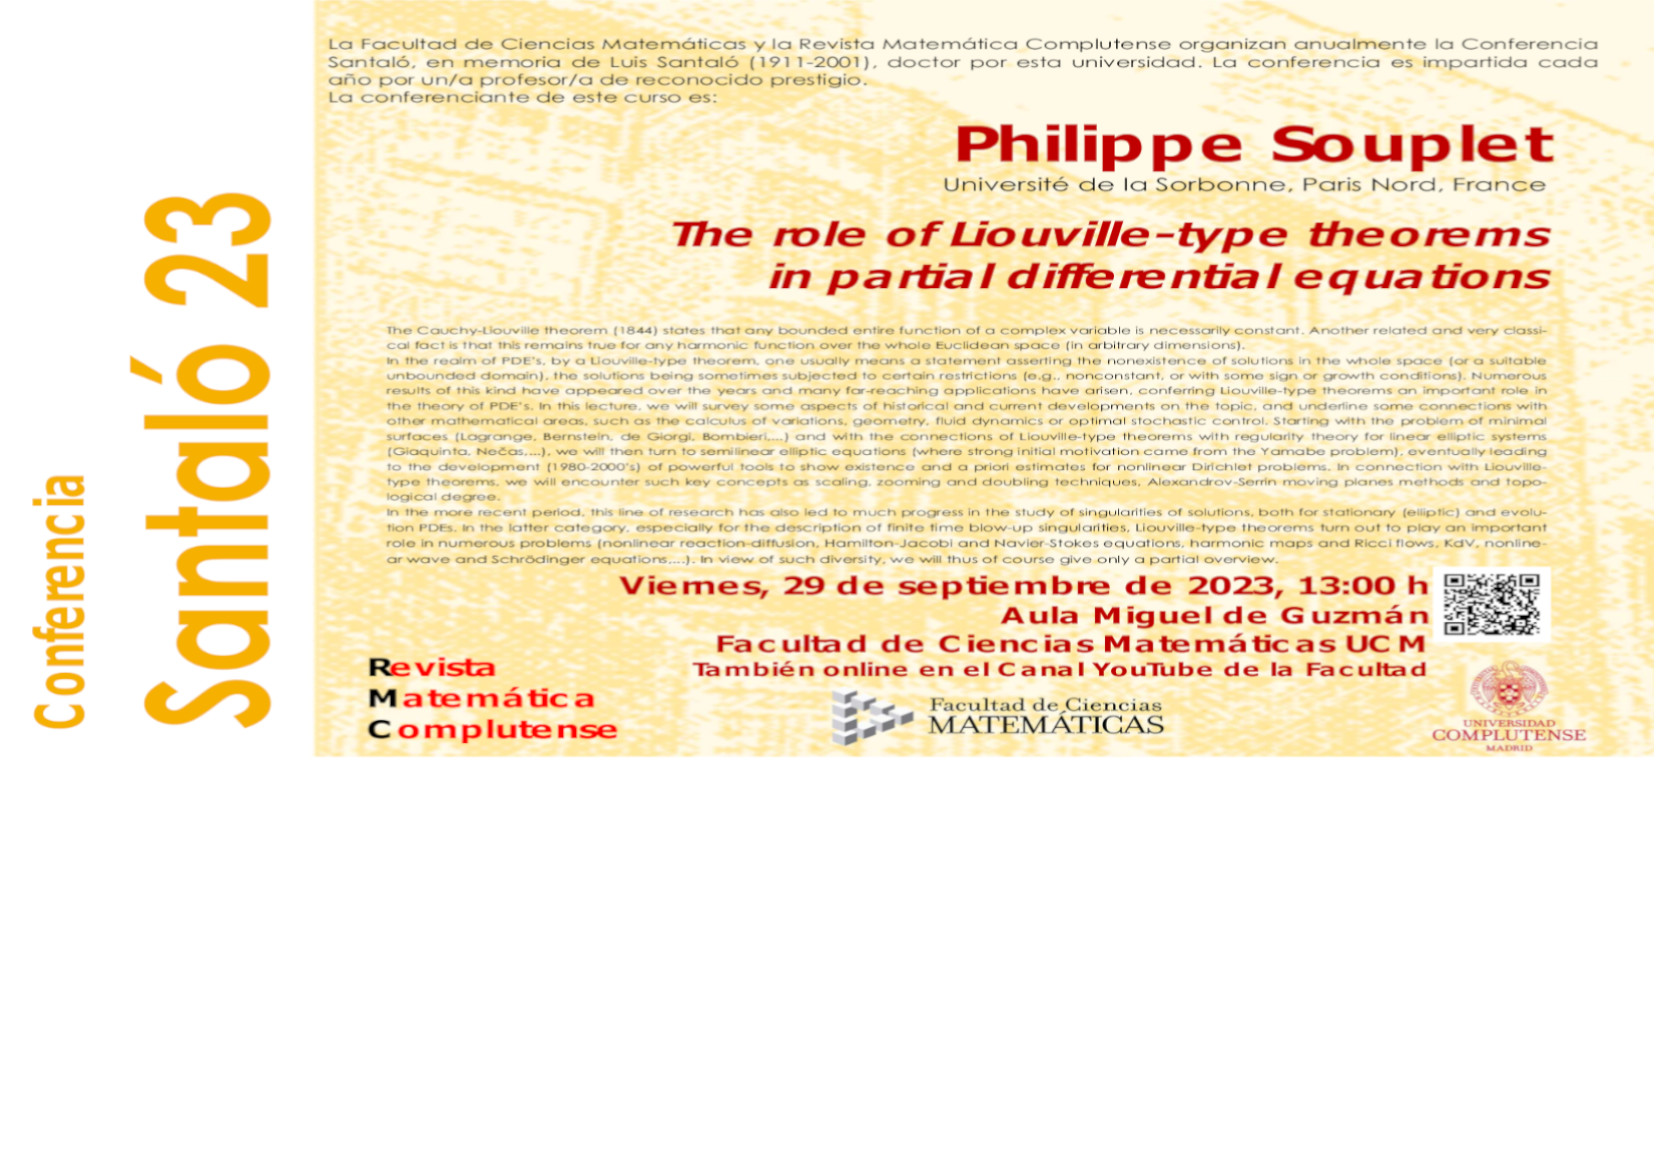 Conferencia Santaló 2023: Philippe Souplet